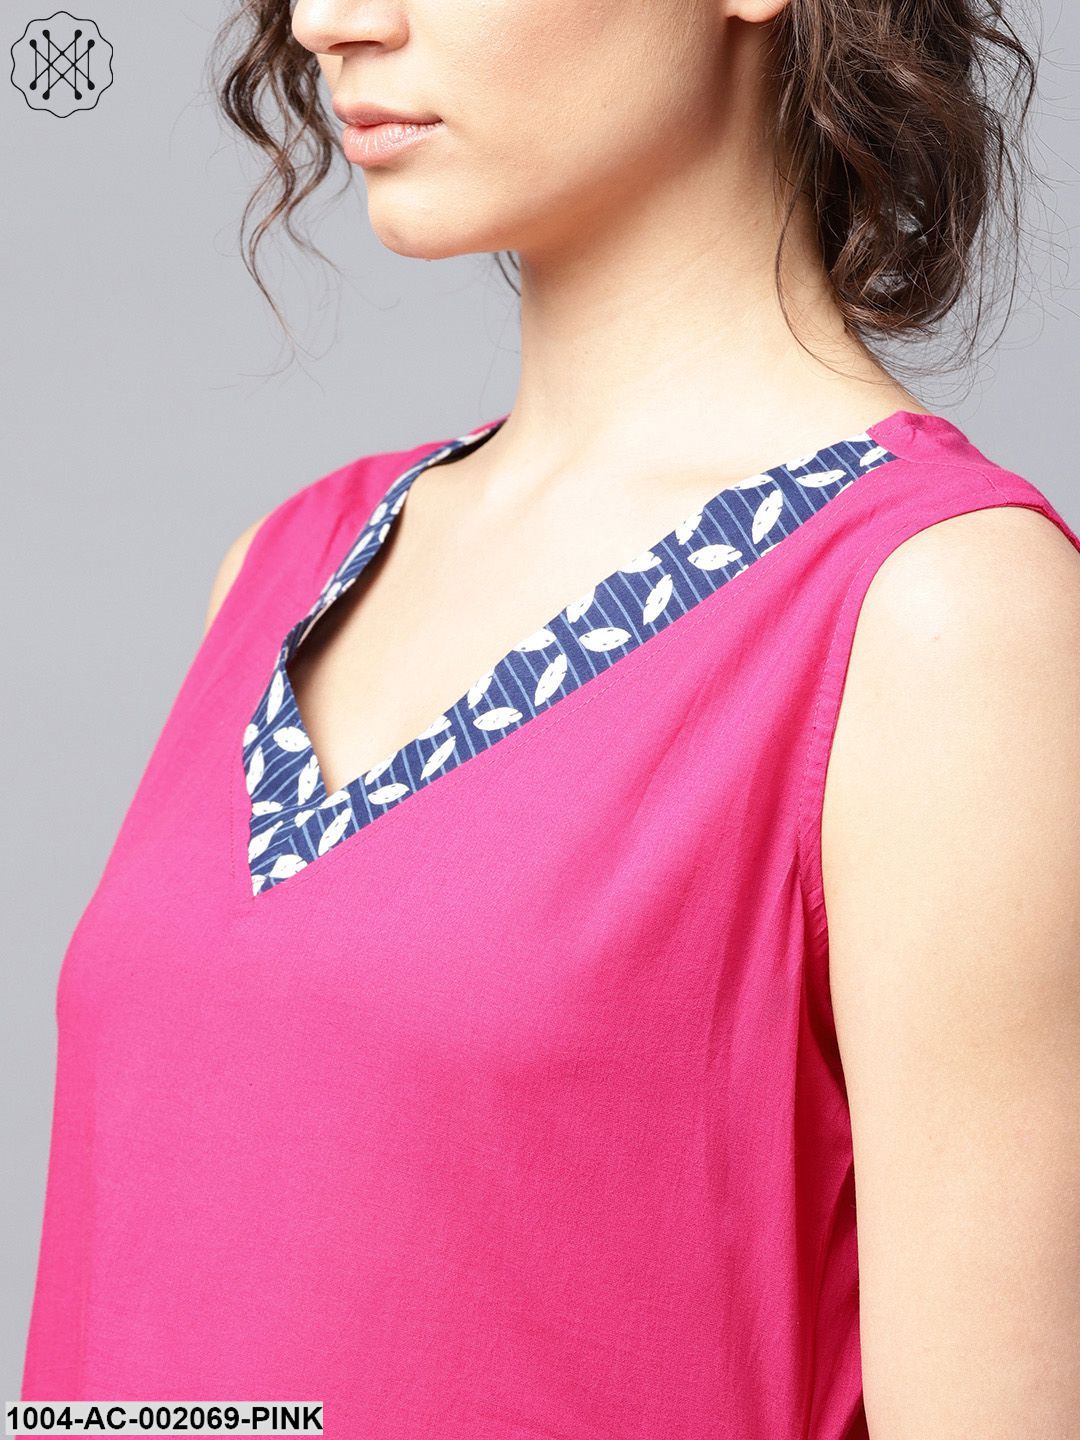 Pink Manipuri Printed Sleeveless Cotton Dress